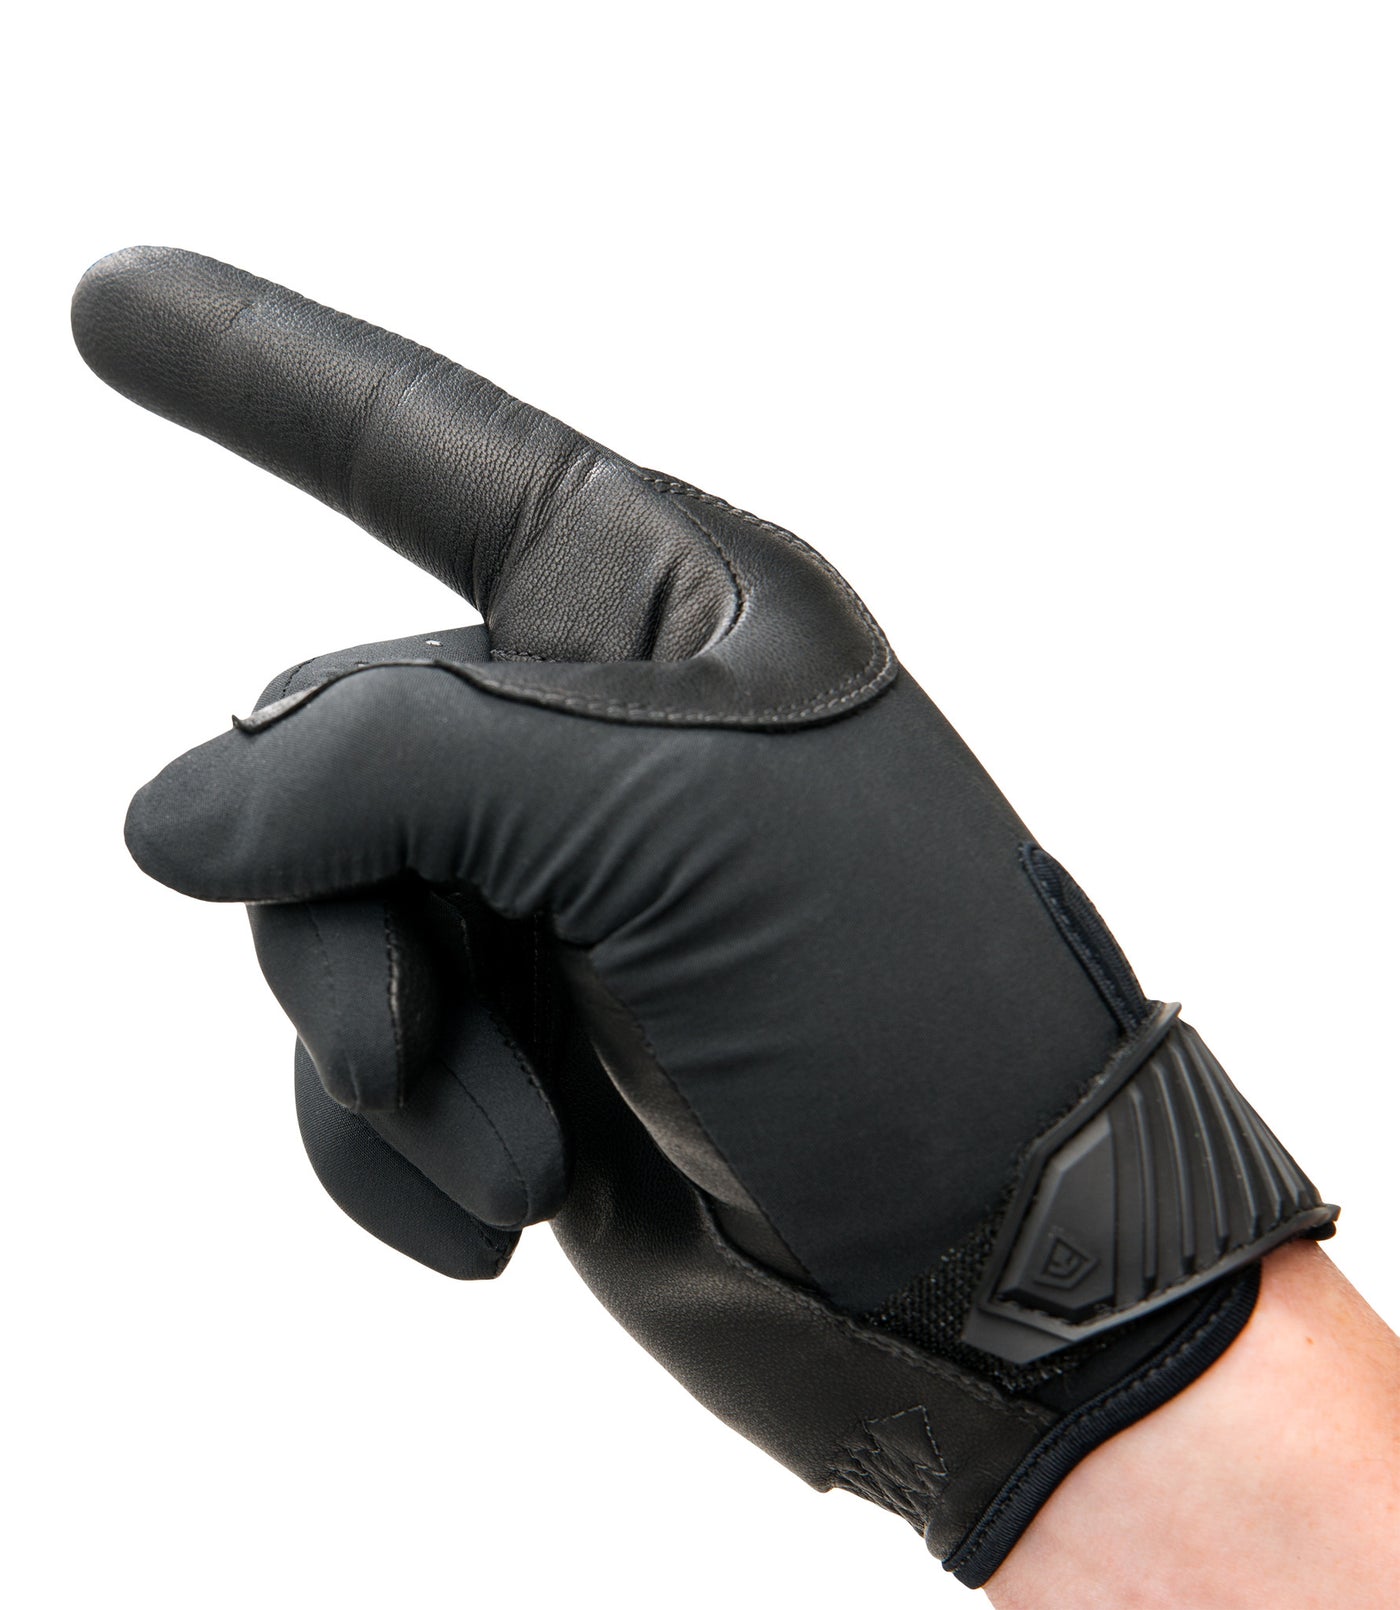 Seamless Finger of Women’s Lightweight Patrol Glove in Black